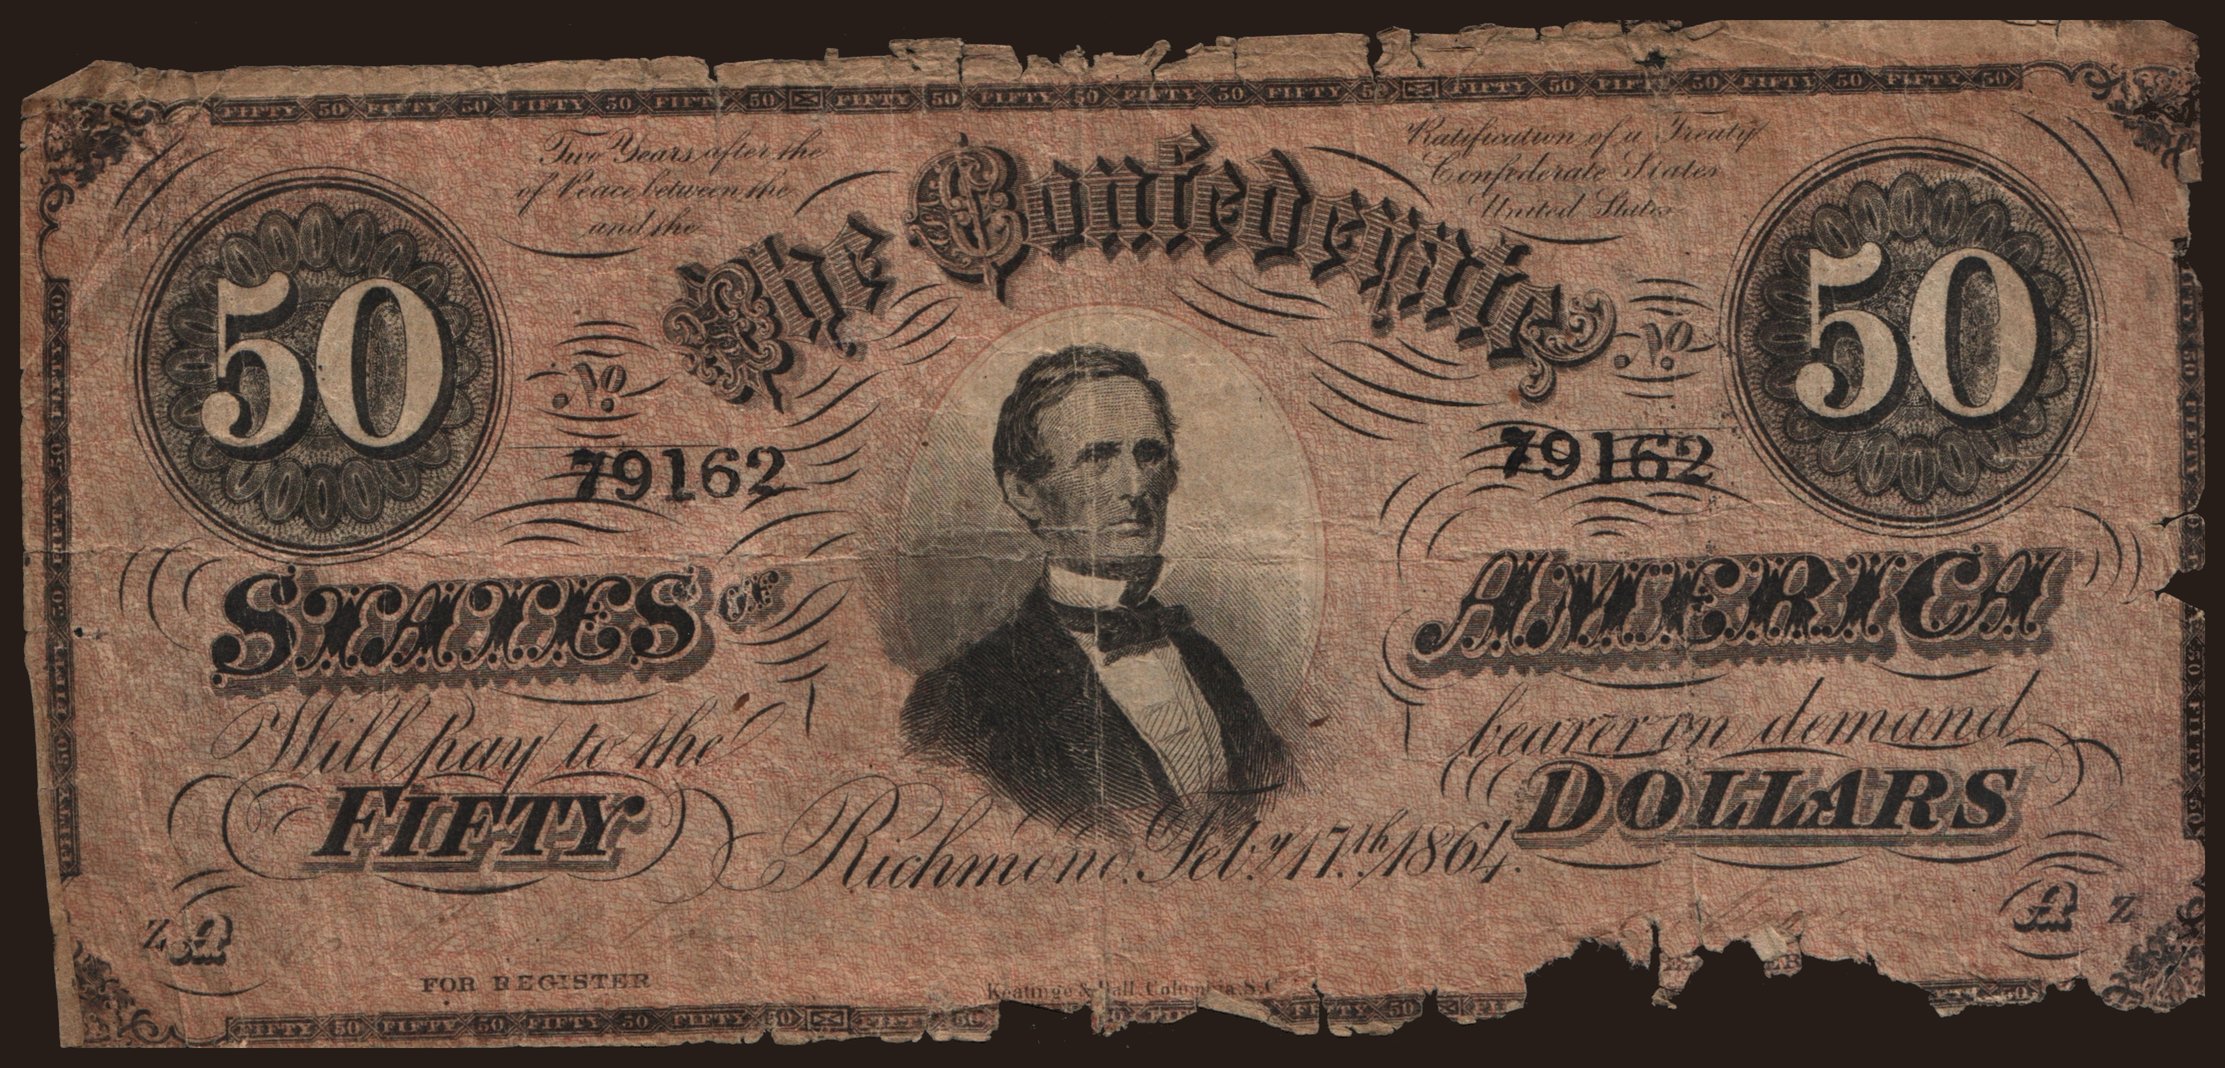 50 dollars, 1864